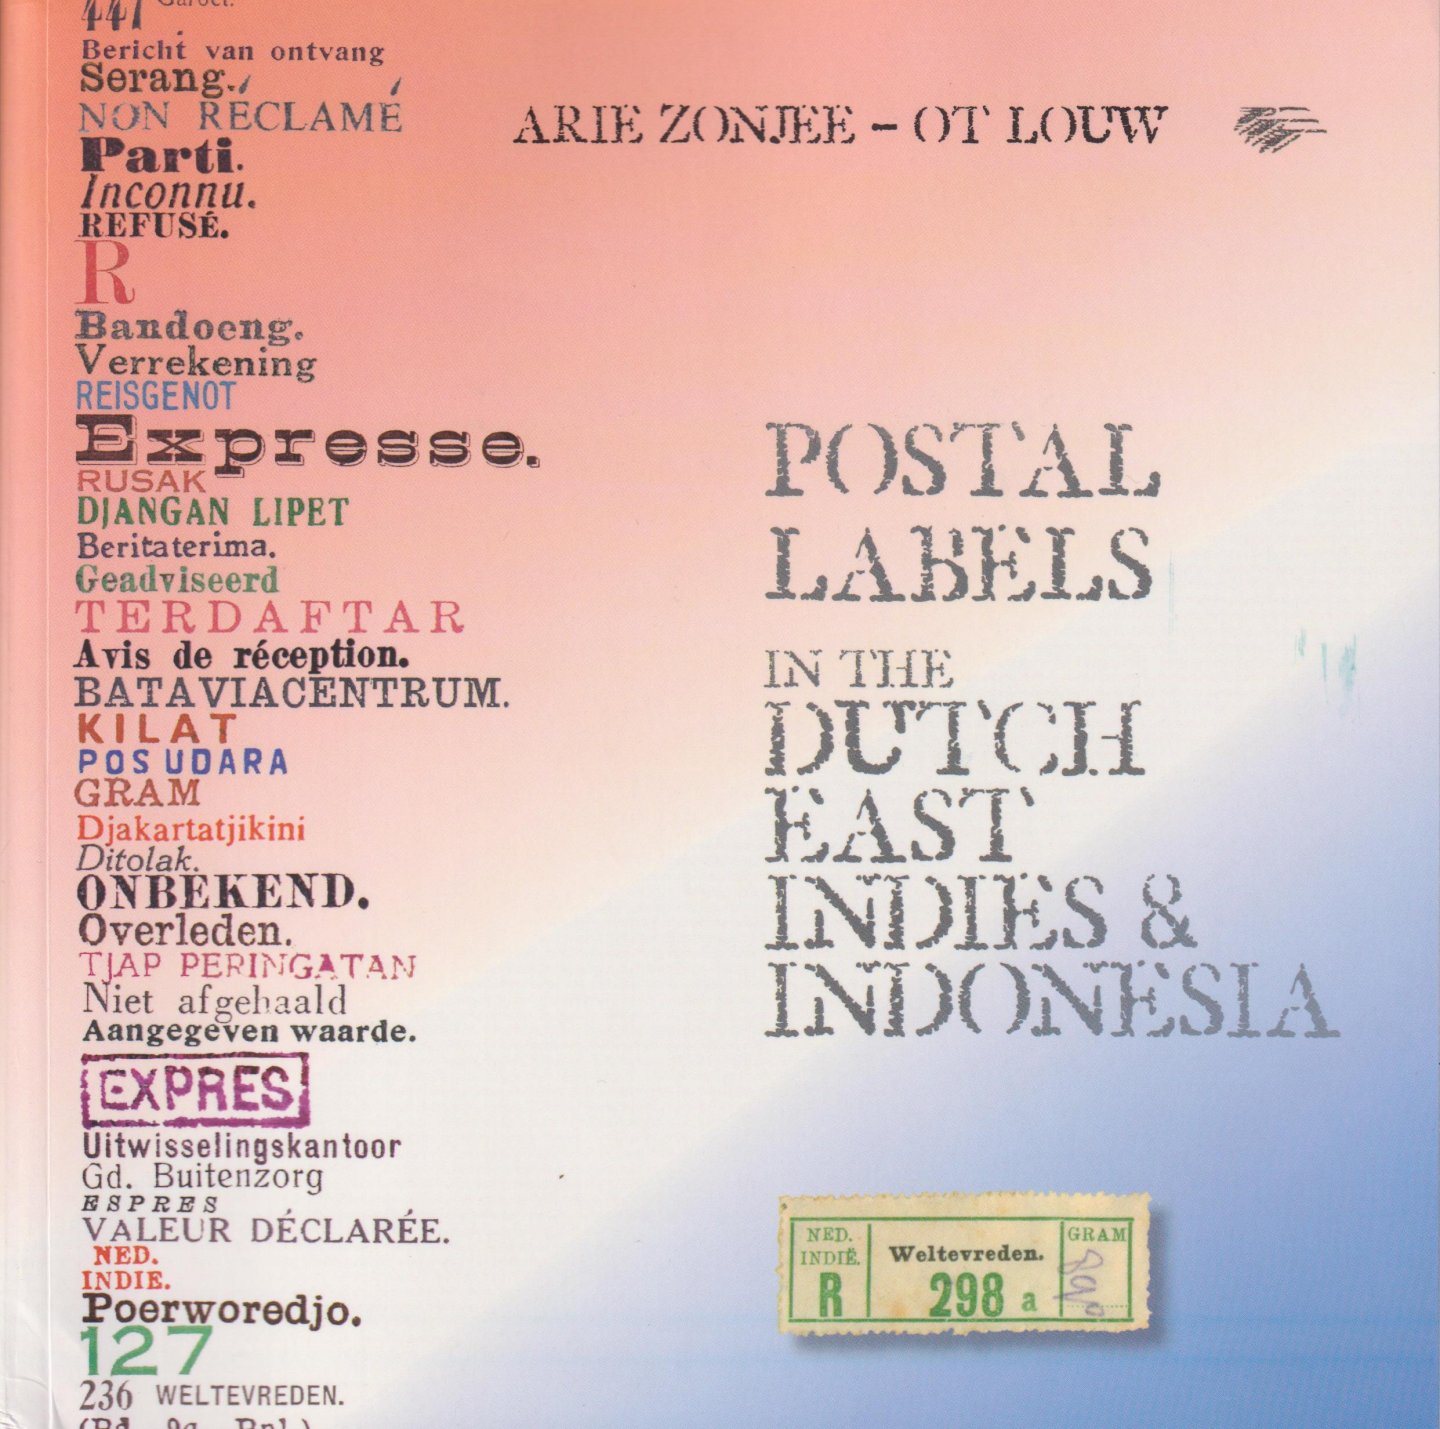 Louw en Arie Zonjee, Ot - Postal labels in the Dutch East Indies & Indonesia